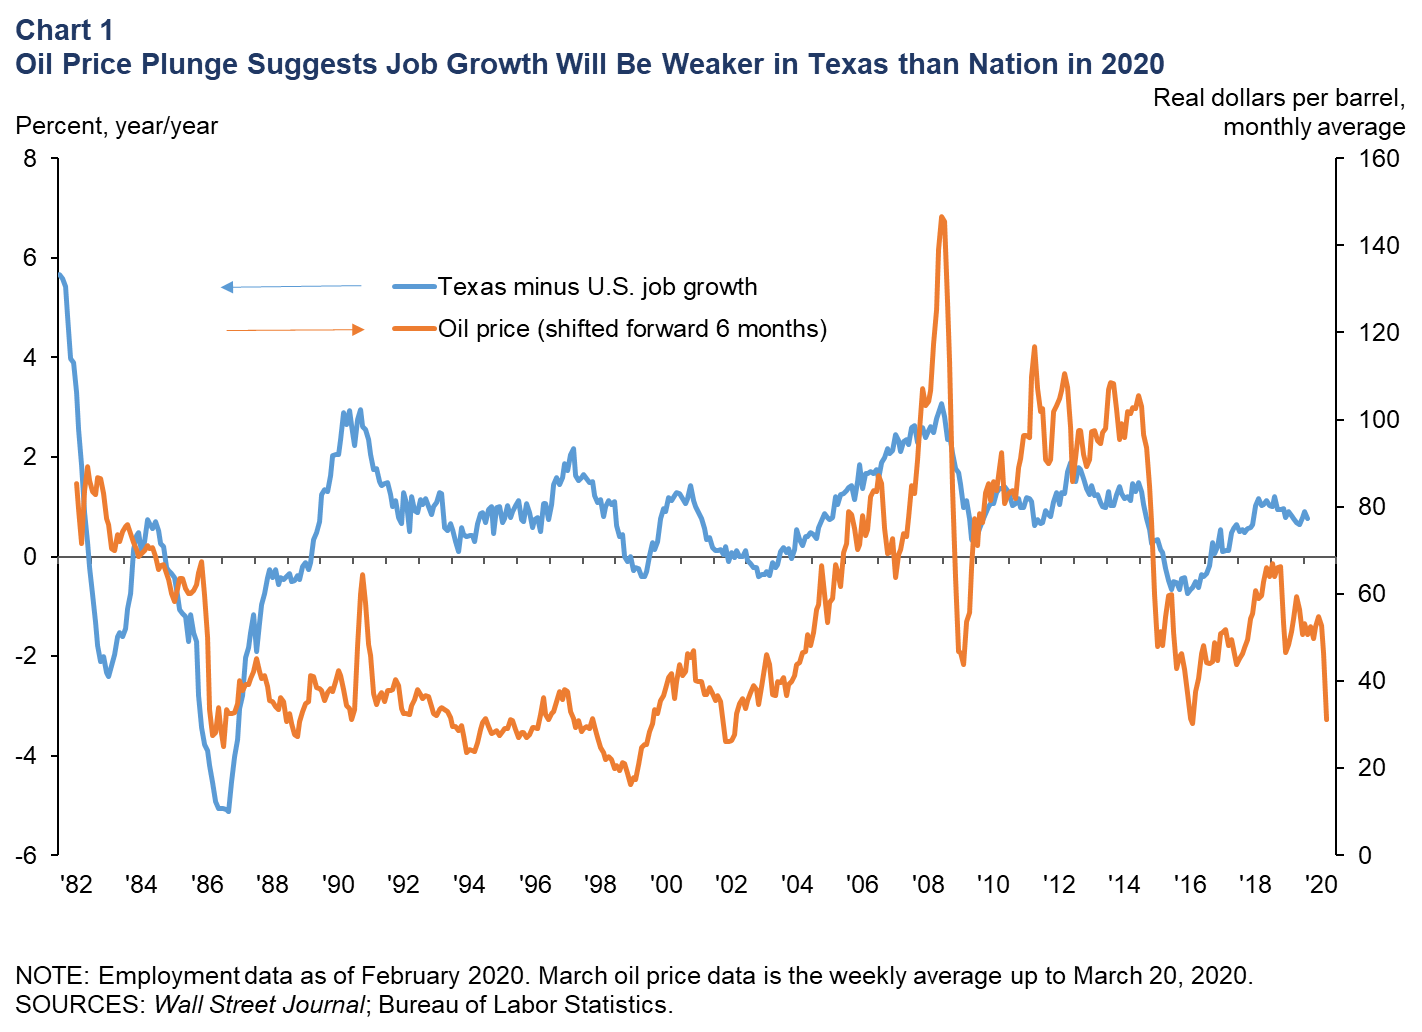 Texas Job Forecast